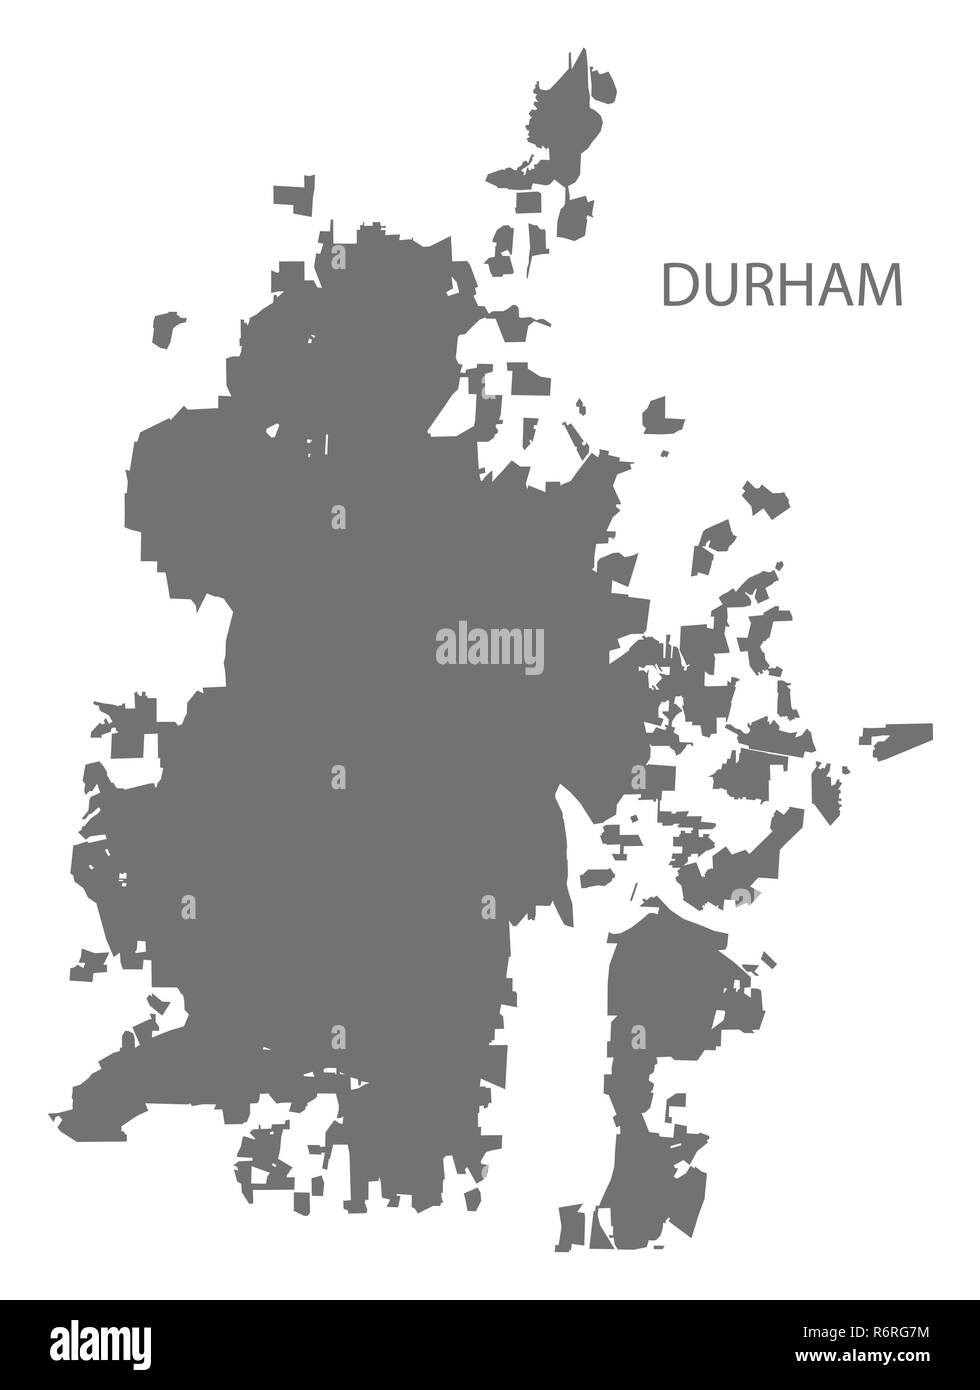 Durham North Carolina city map grey illustration silhouette shape Stock Vector